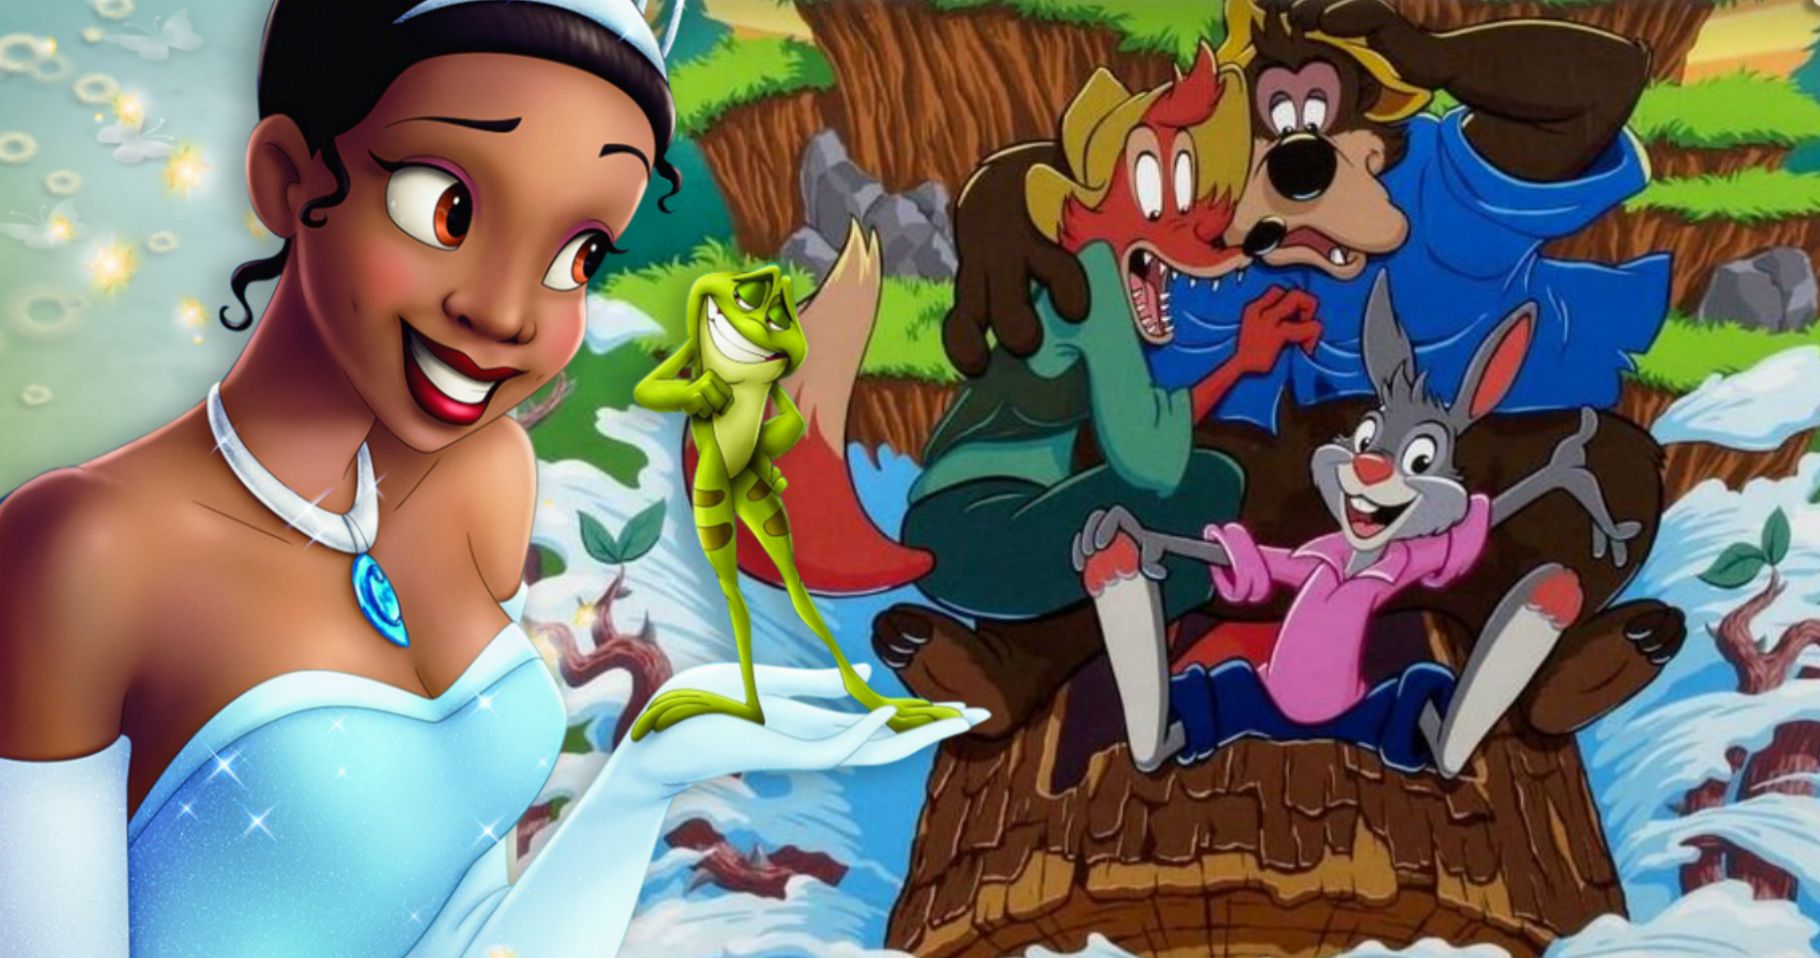 Disney reveals new Splash Mountain Princess and the Frog image